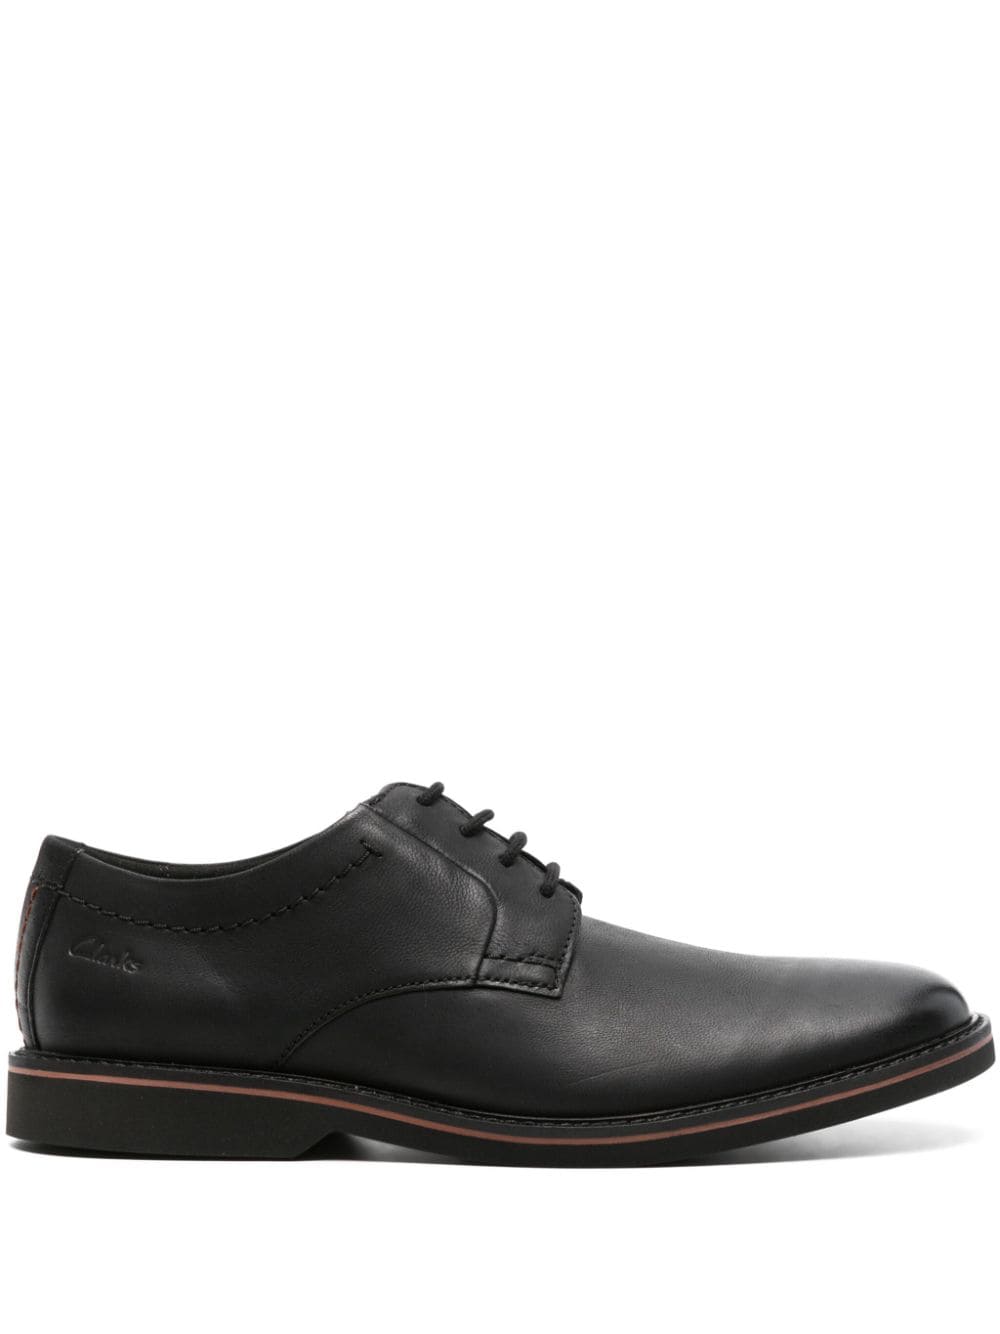 Clarks Atticus LTLace leather derby shoes - Black von Clarks